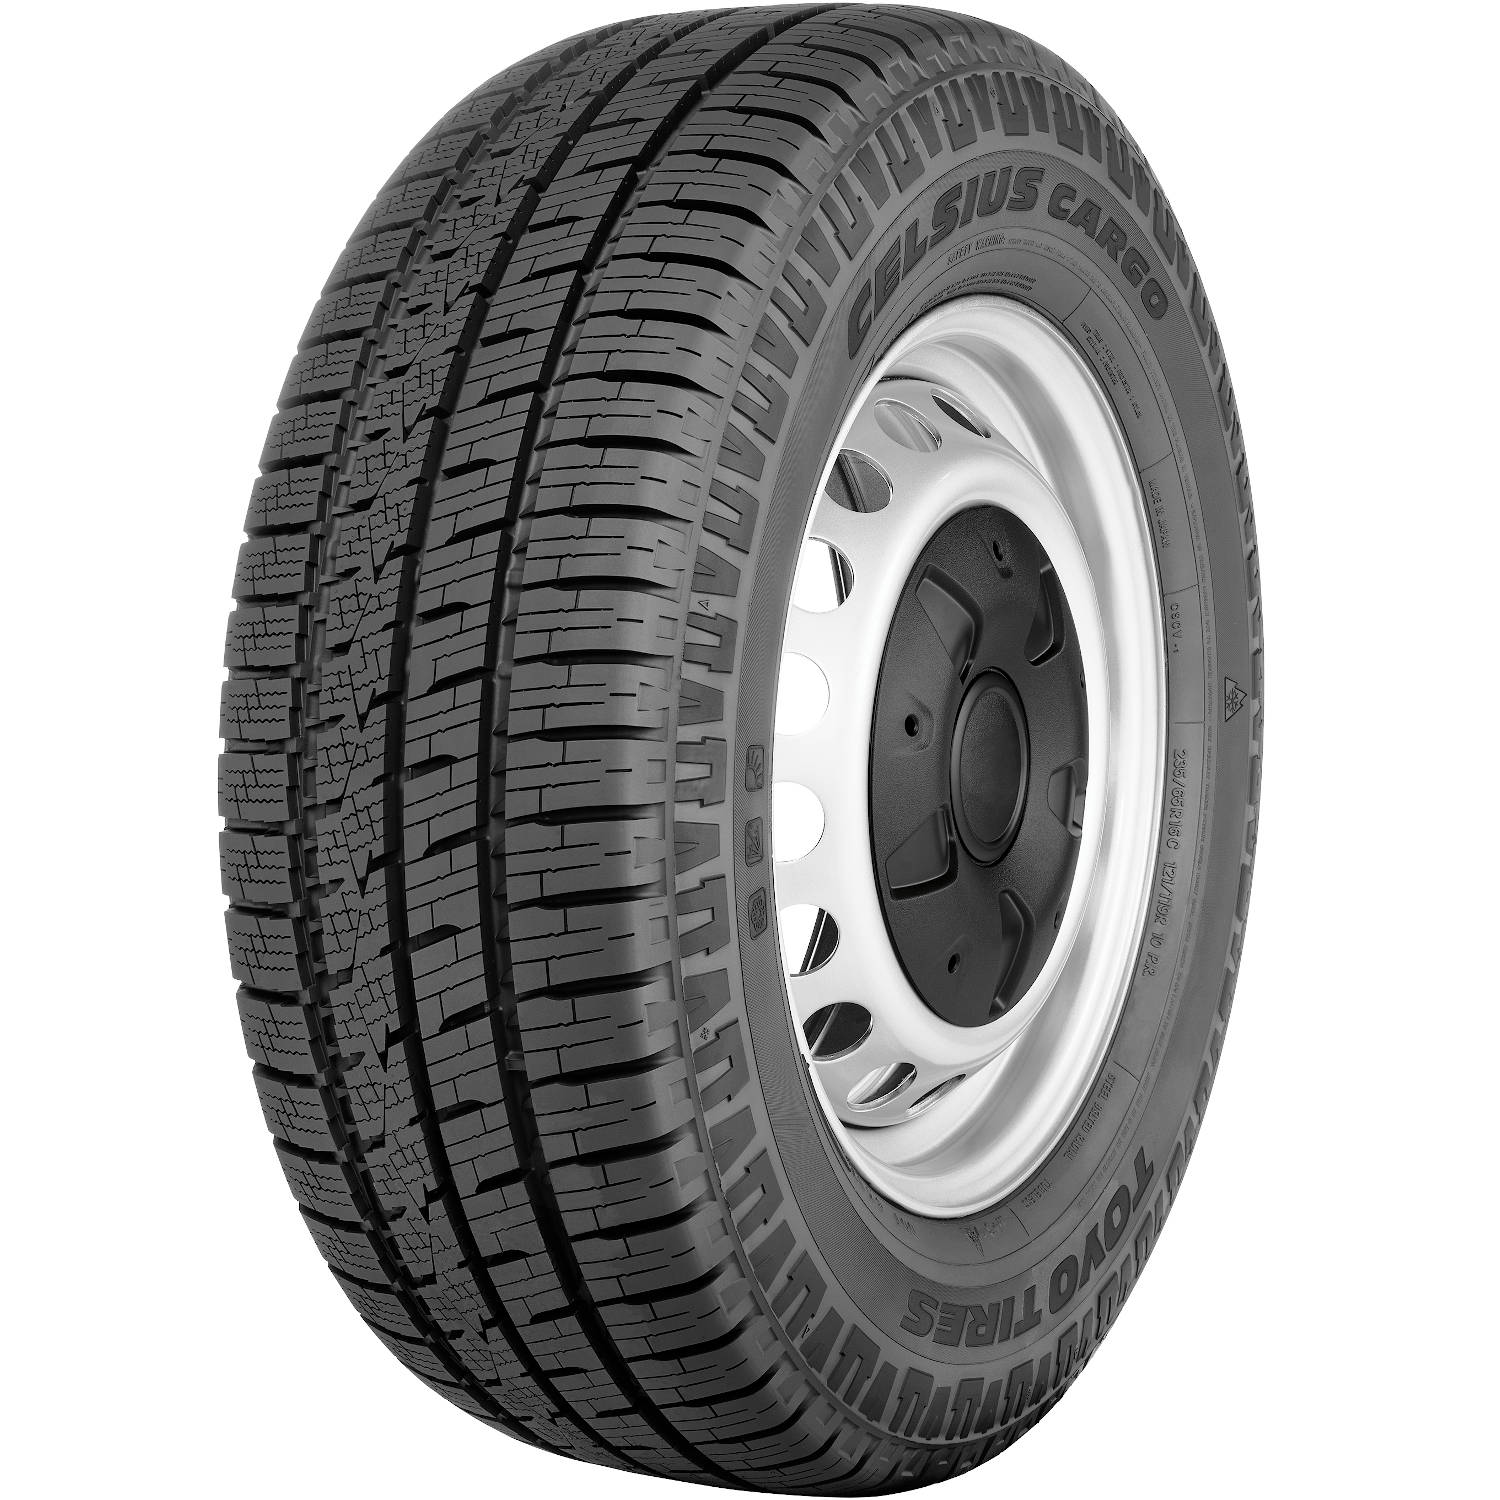 TOYO TIRES CELSIUS CARGO 195/75R16 (27.5X7.7R 16) Tires